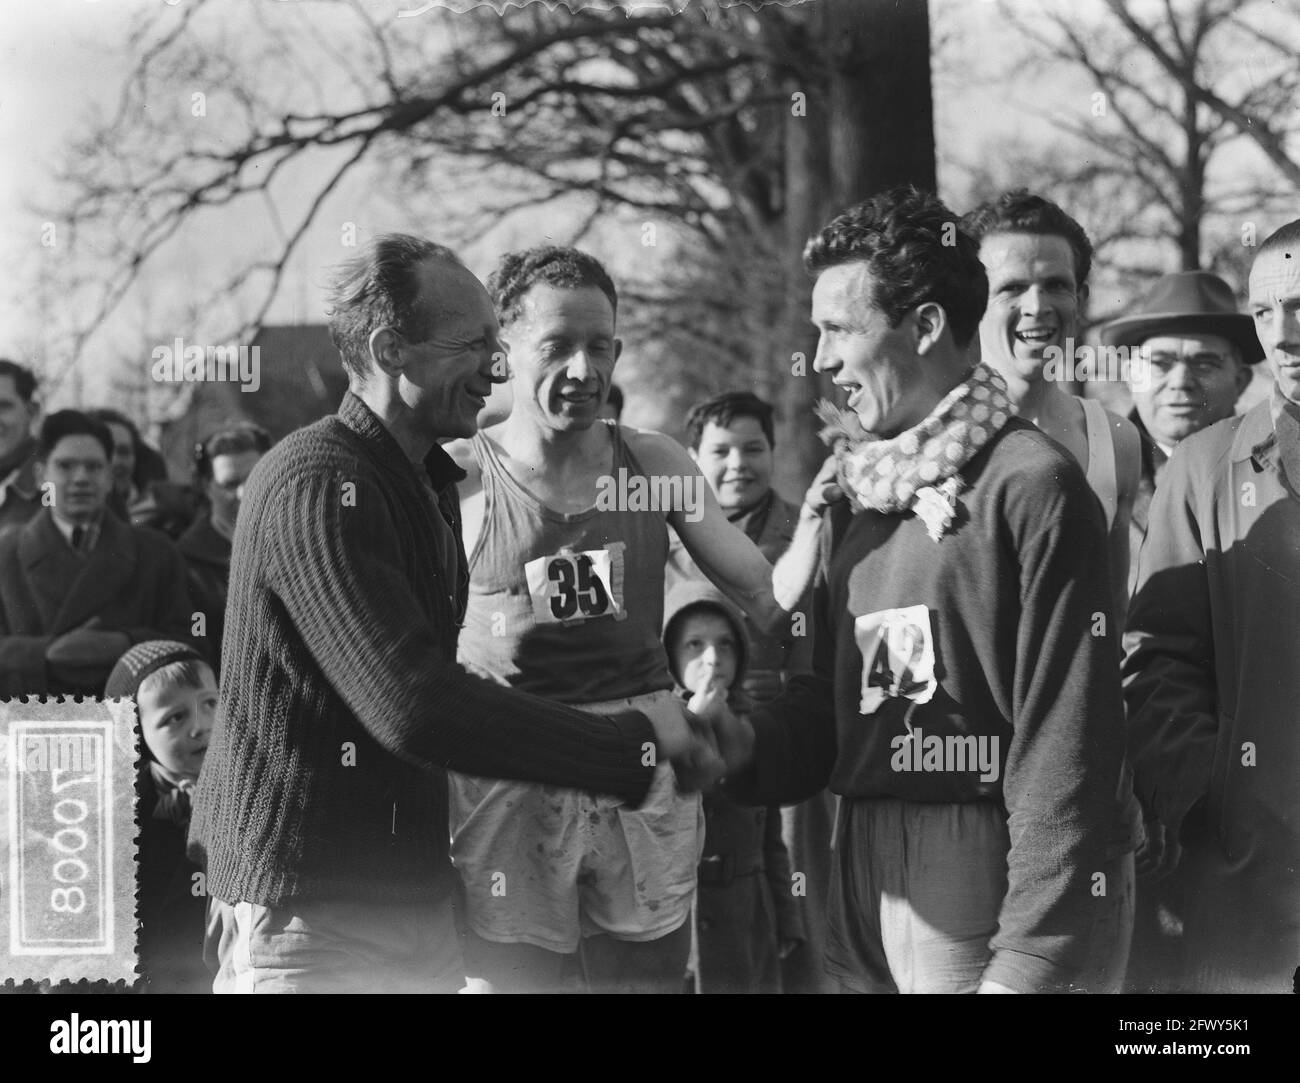 Athletics cross championships Netherlands, first W. van Zeeland, March 6, 1955, ATLETICS, Cross championships, The Netherlands, 20th century press age Stock Photo